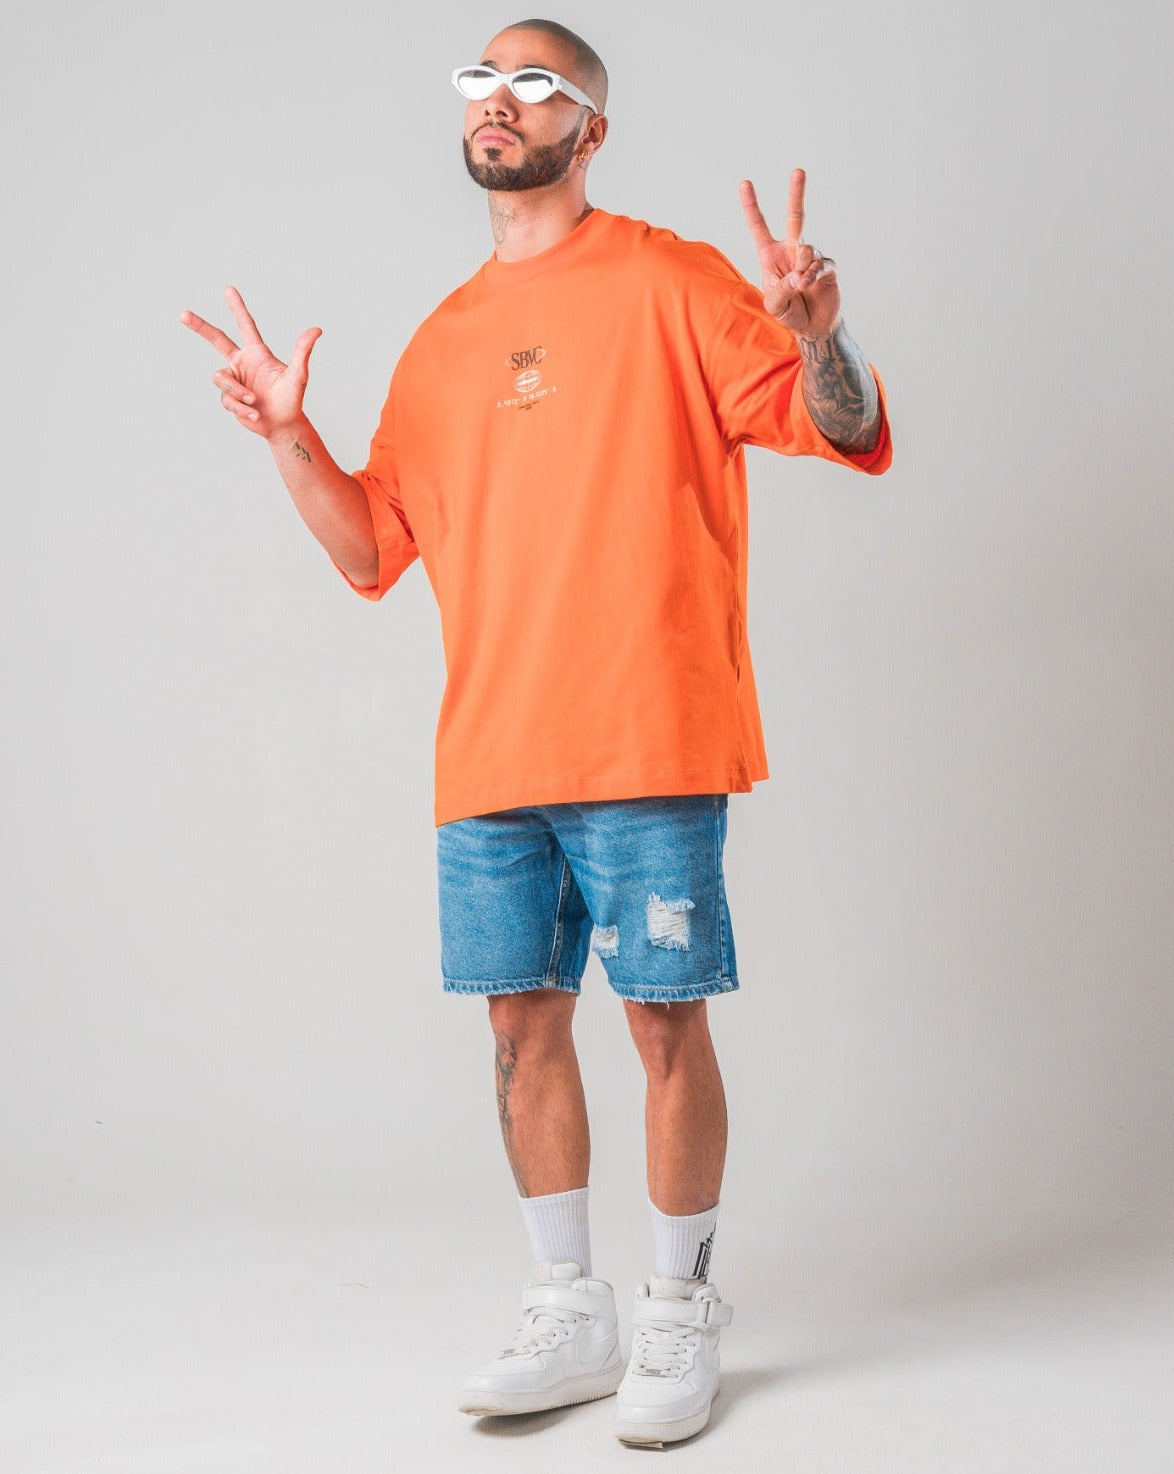 Camiseta Oversize Naranja - Buenas Vibras